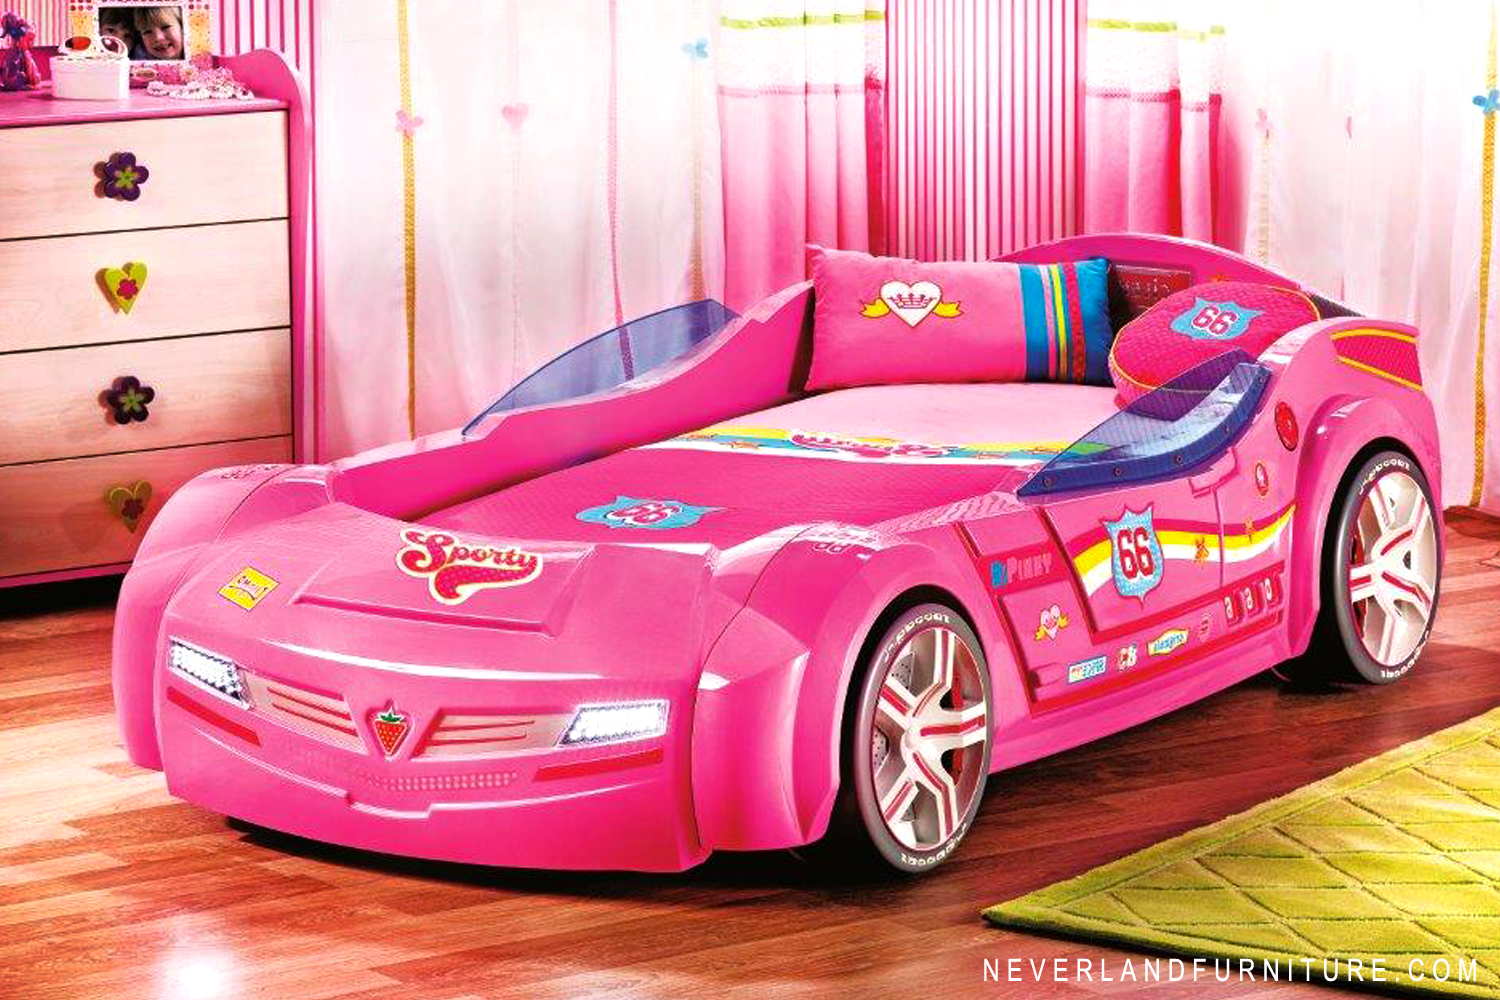 girls car bed